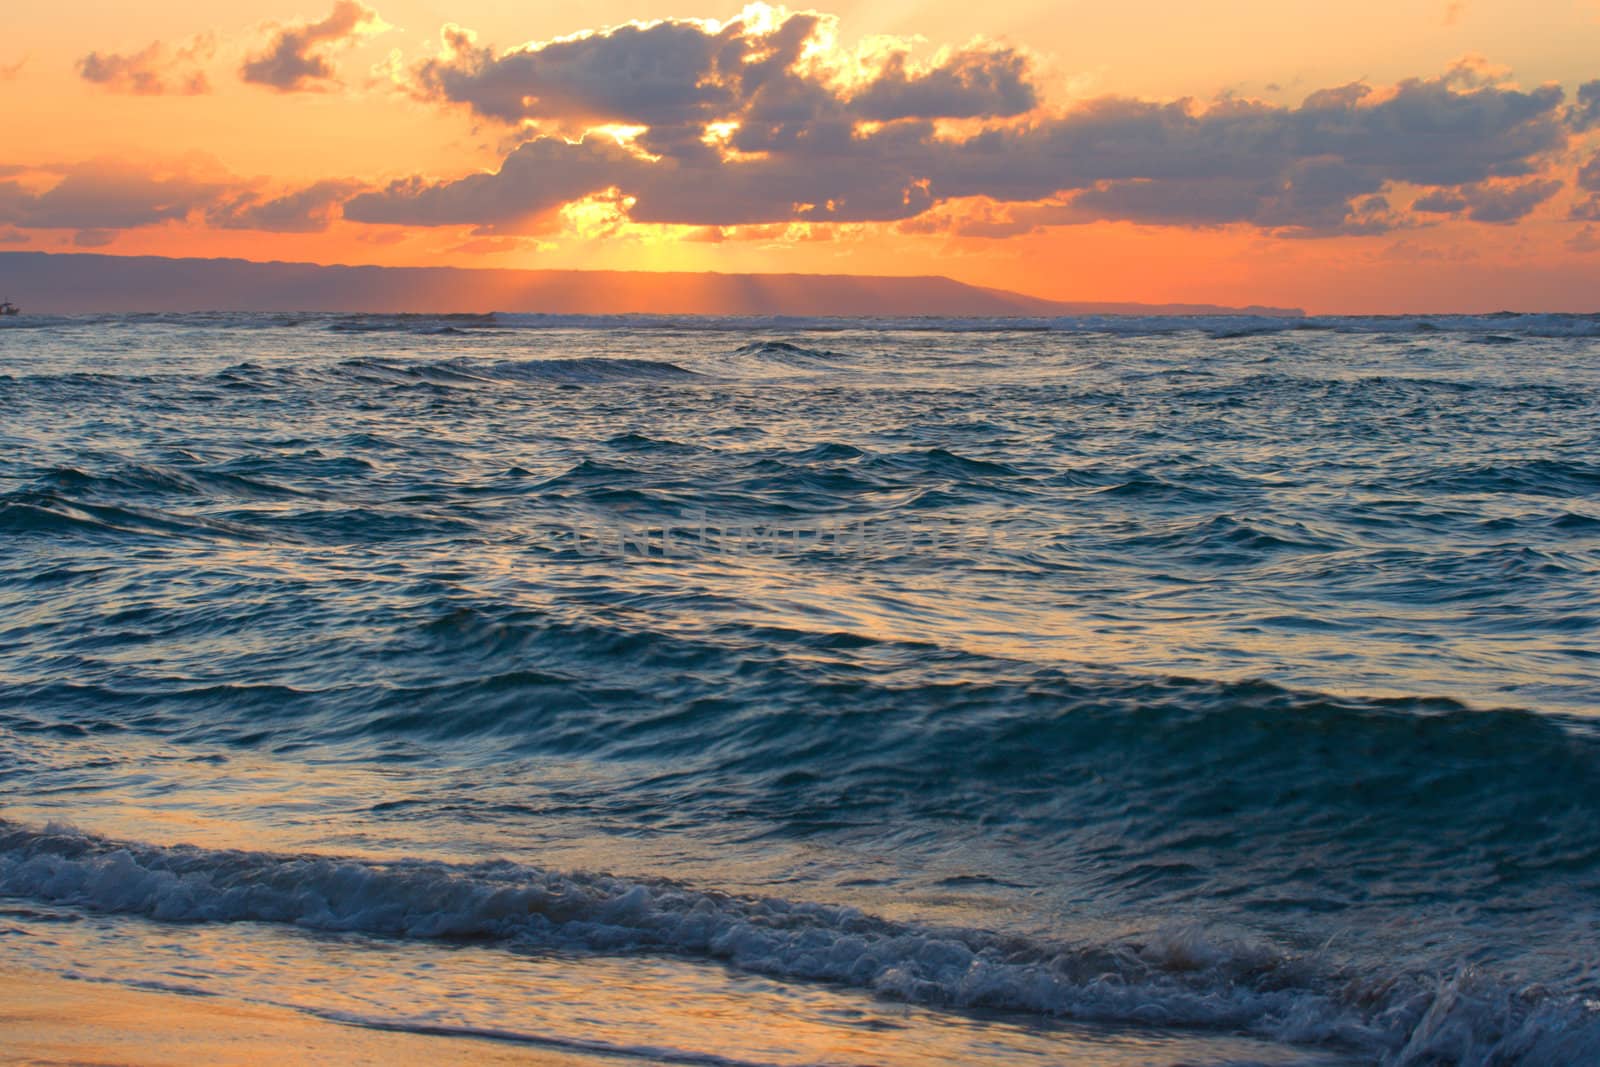 Calm ocean and beach on tropical sunrise by dimol